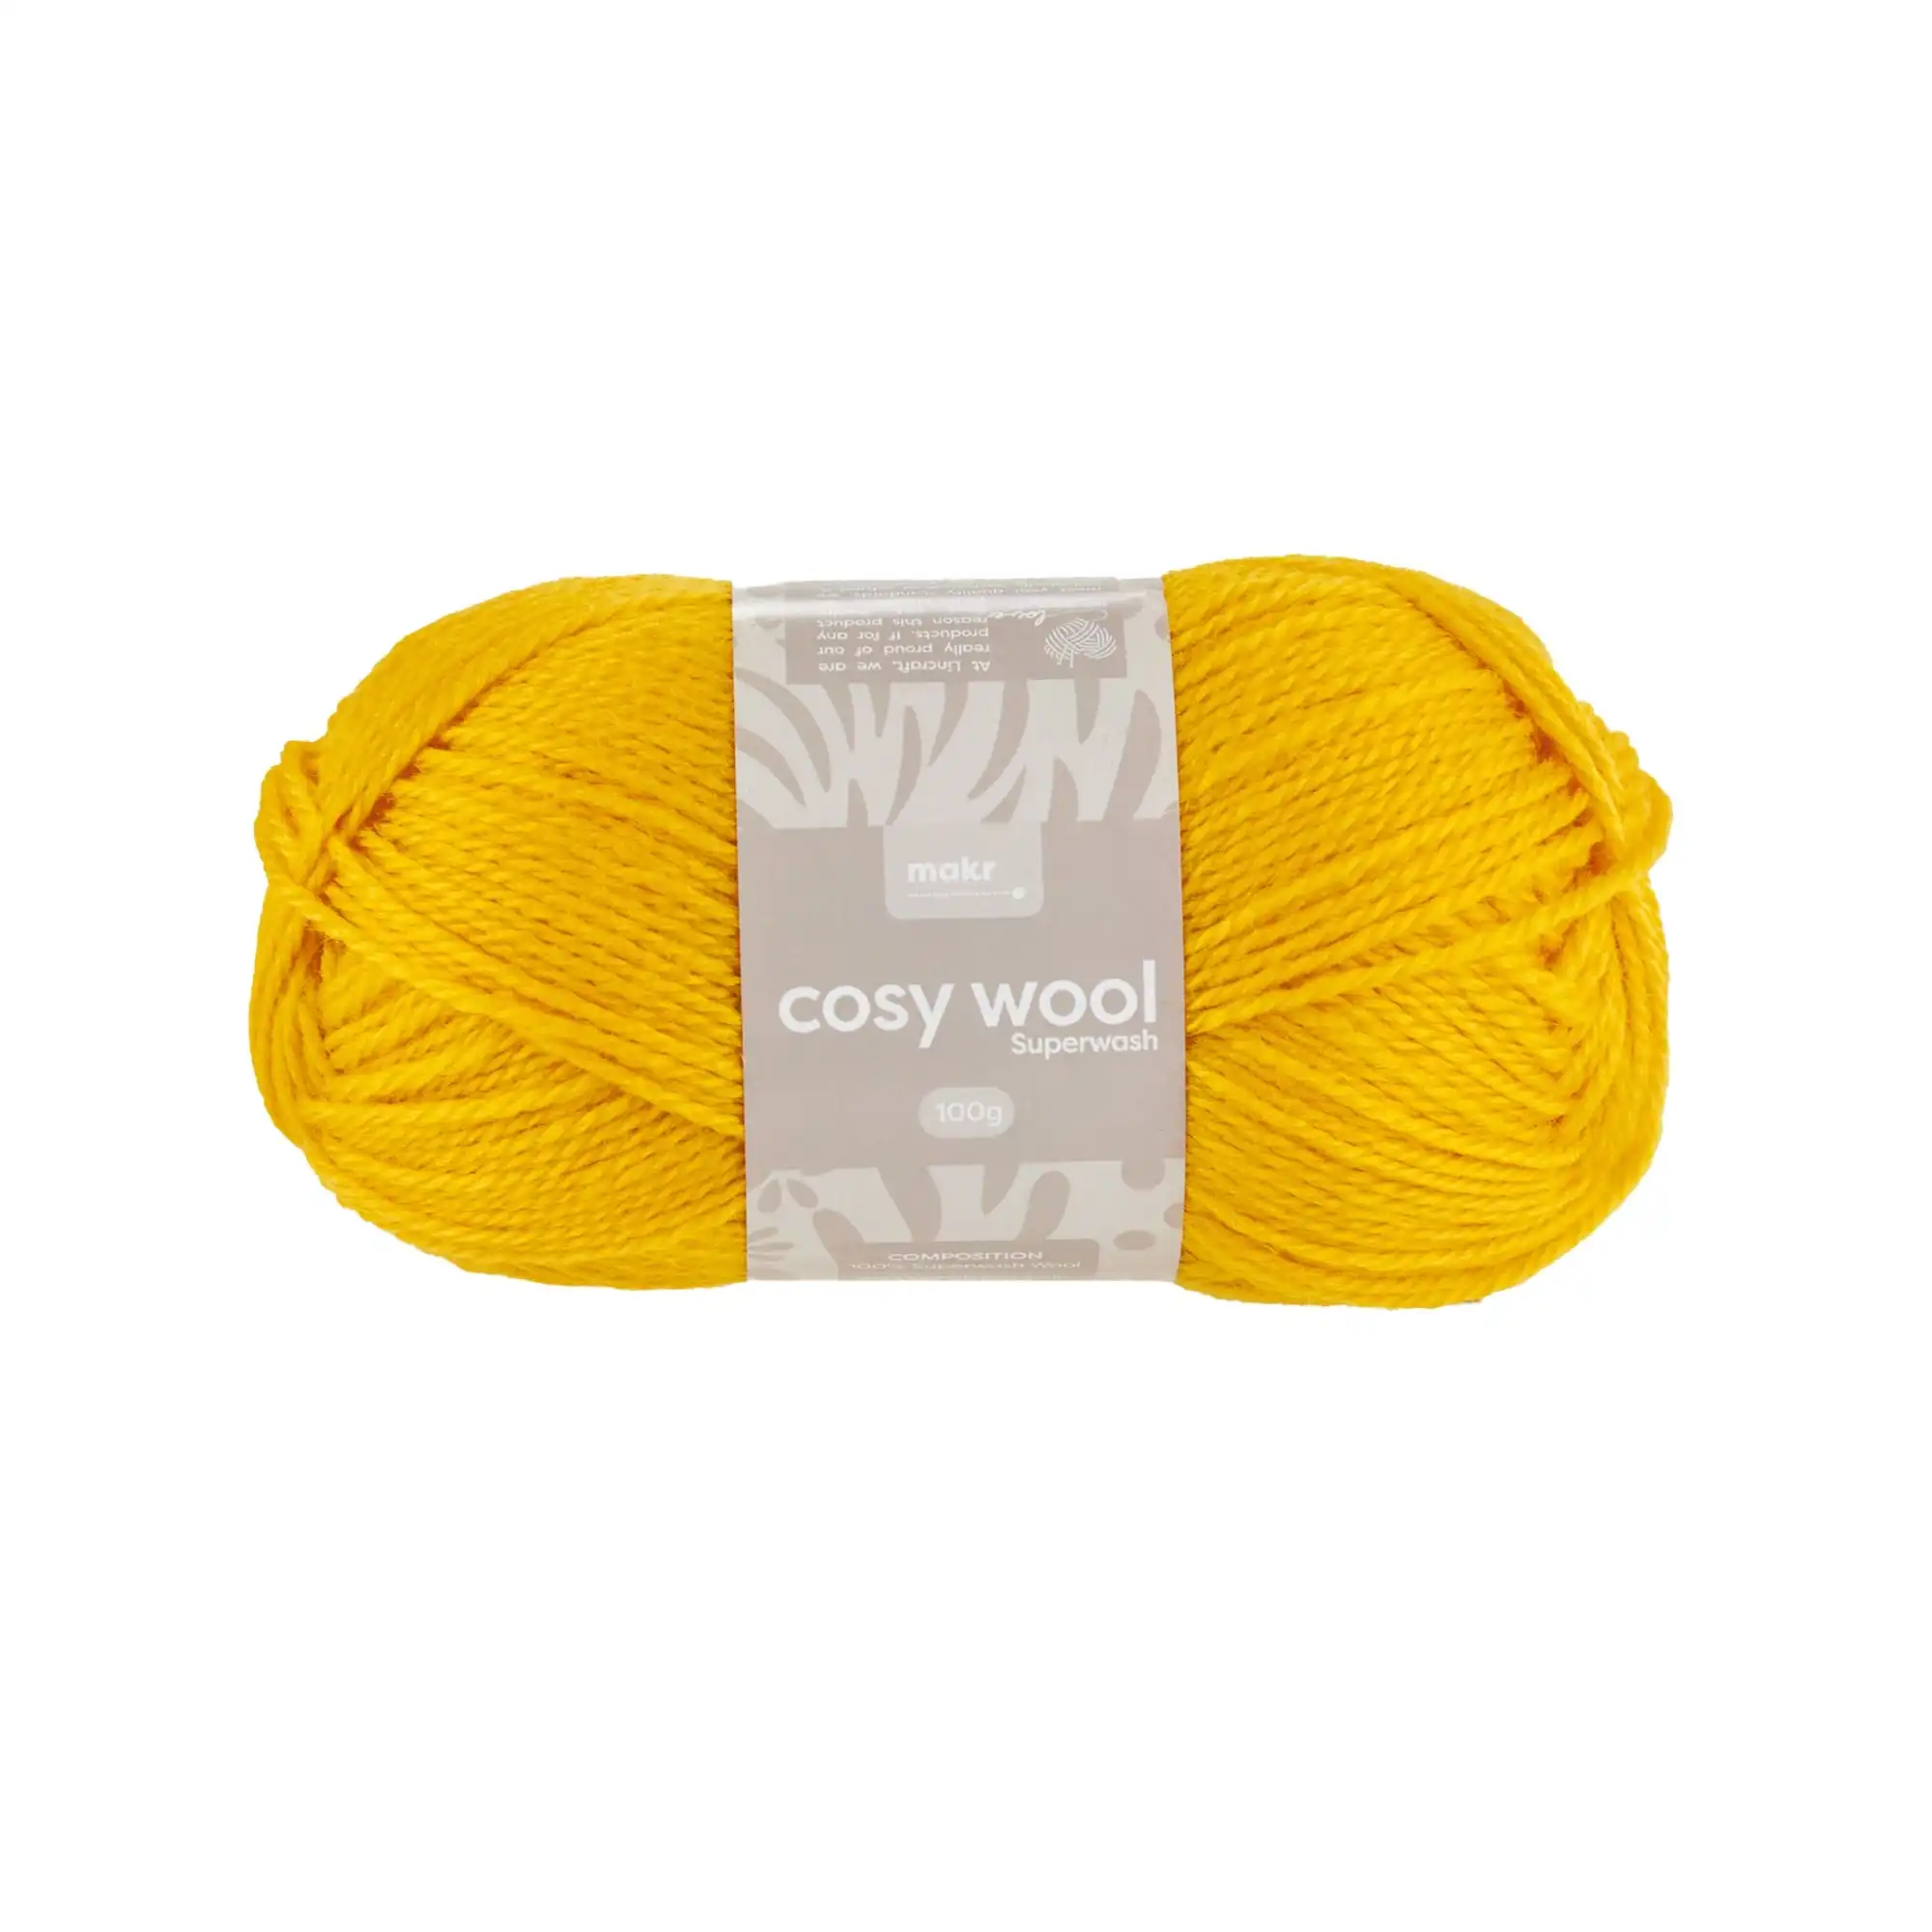 Makr Chunky Wool Crochet & Knitting Yarn, Lambswool- 100g – Lincraft New  Zealand, Yarn Chunky